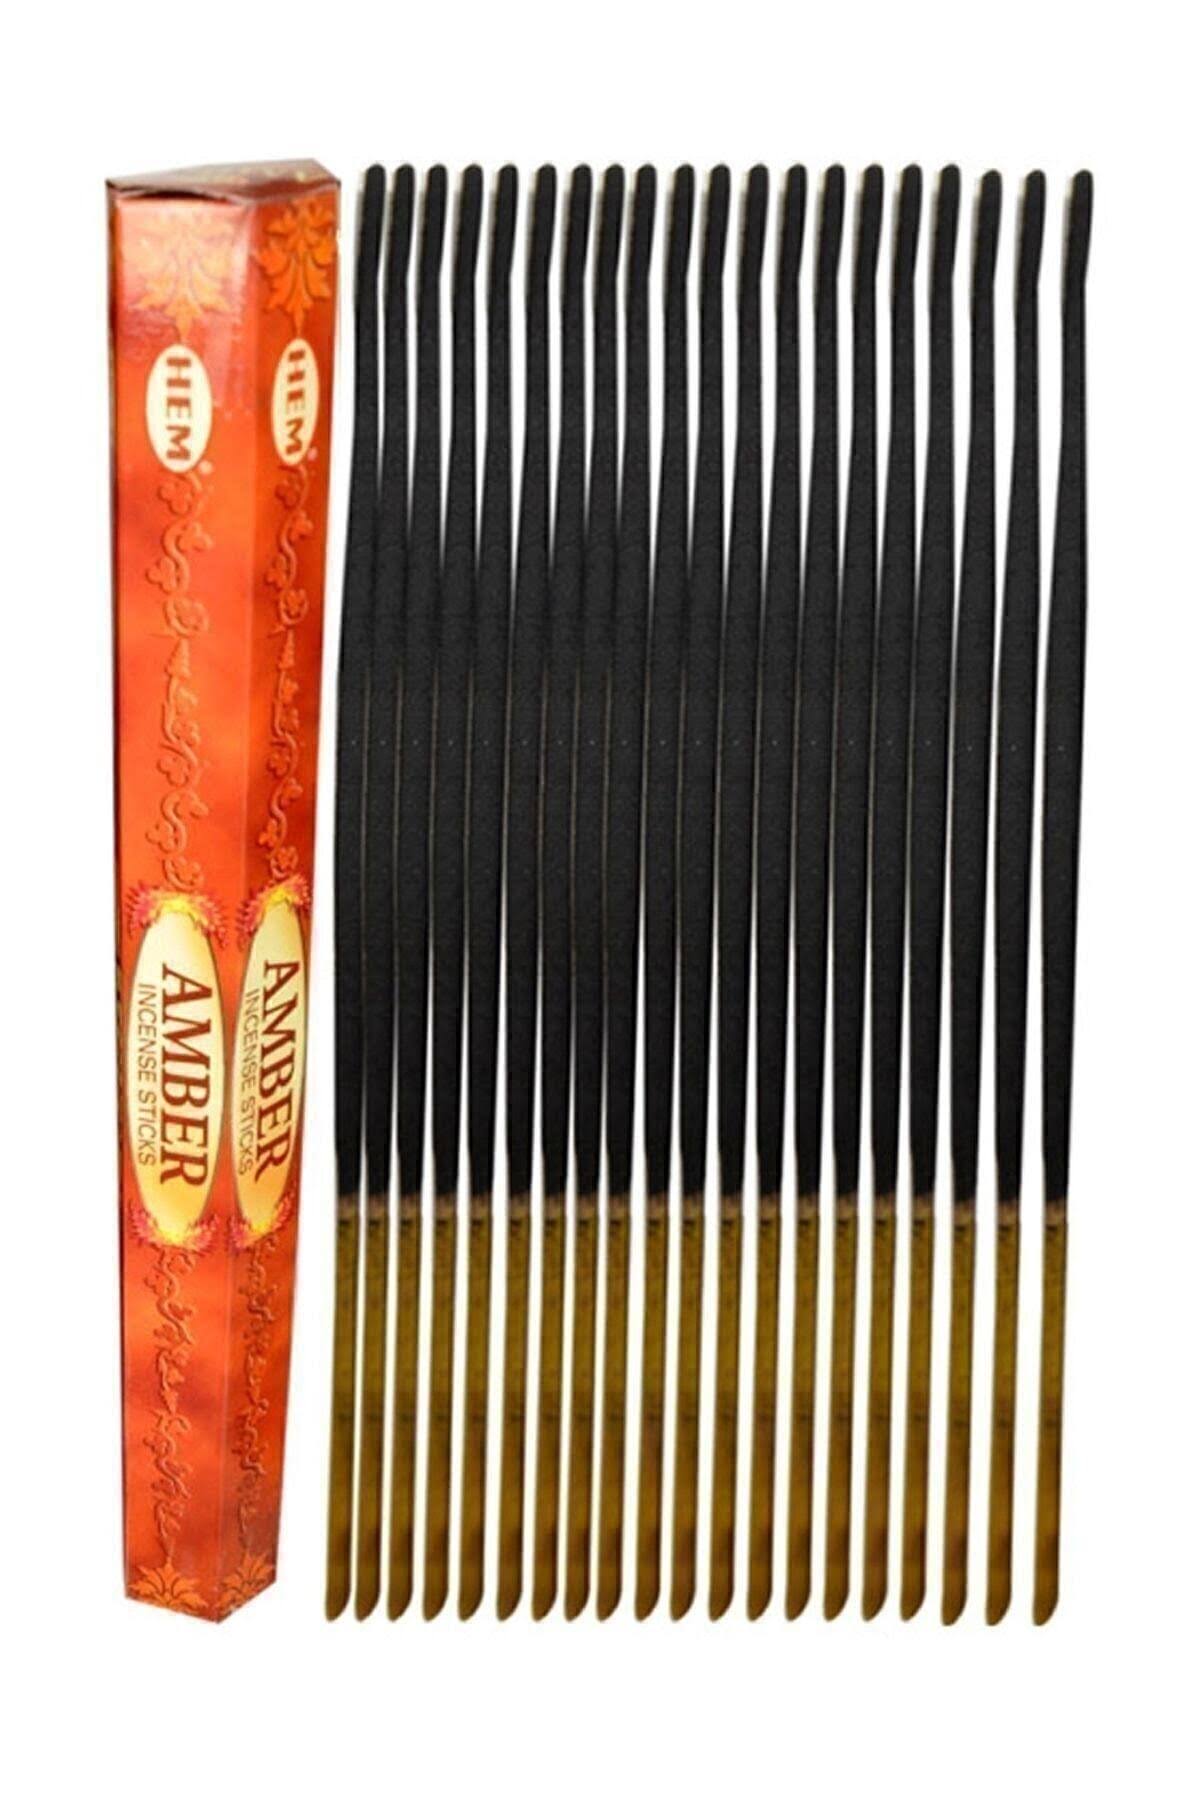 Hem - 20 Amber Incense Sticks